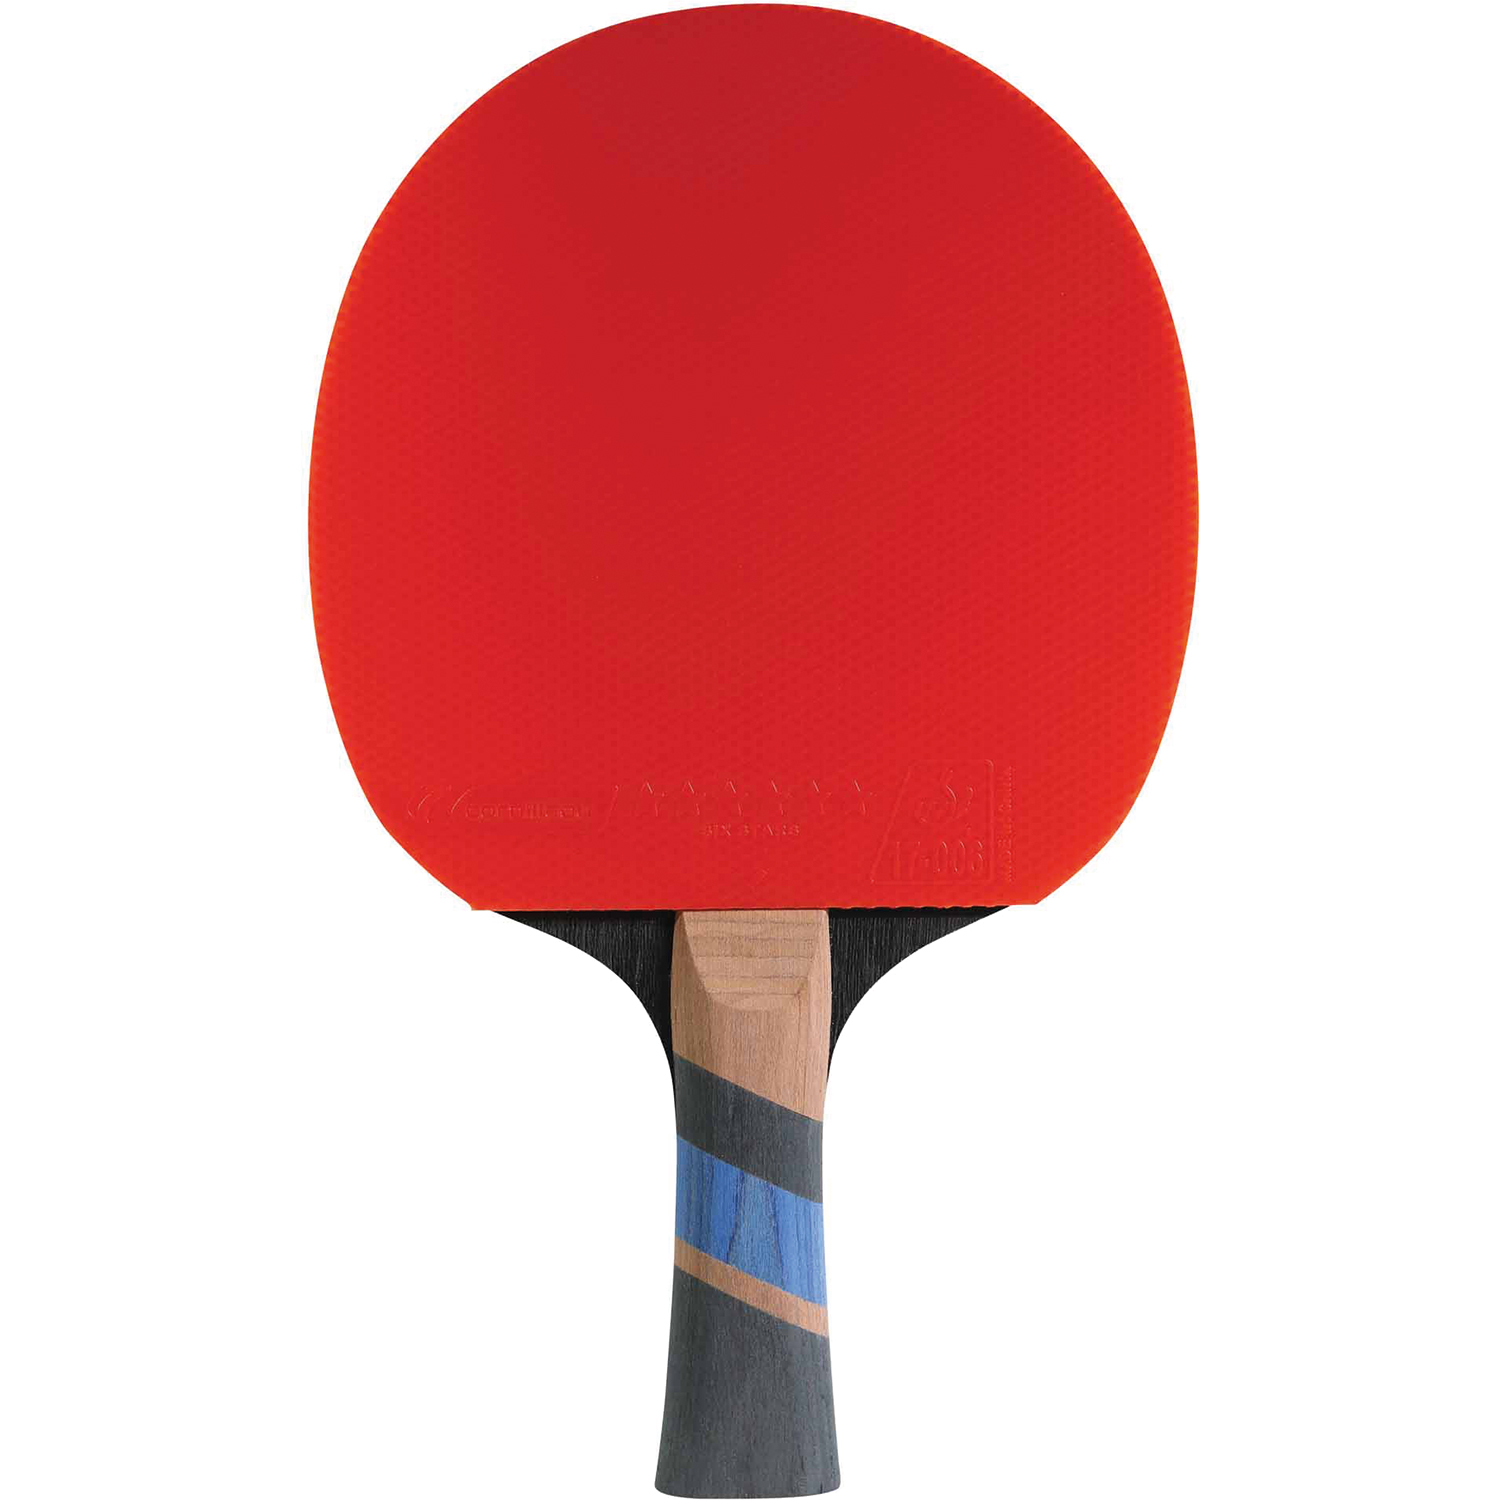 Pala De Tenis De Mesa De Interior Cornilleau Excell 1000 - Pala Ping Pong Cornilleau Sport 100  MKP